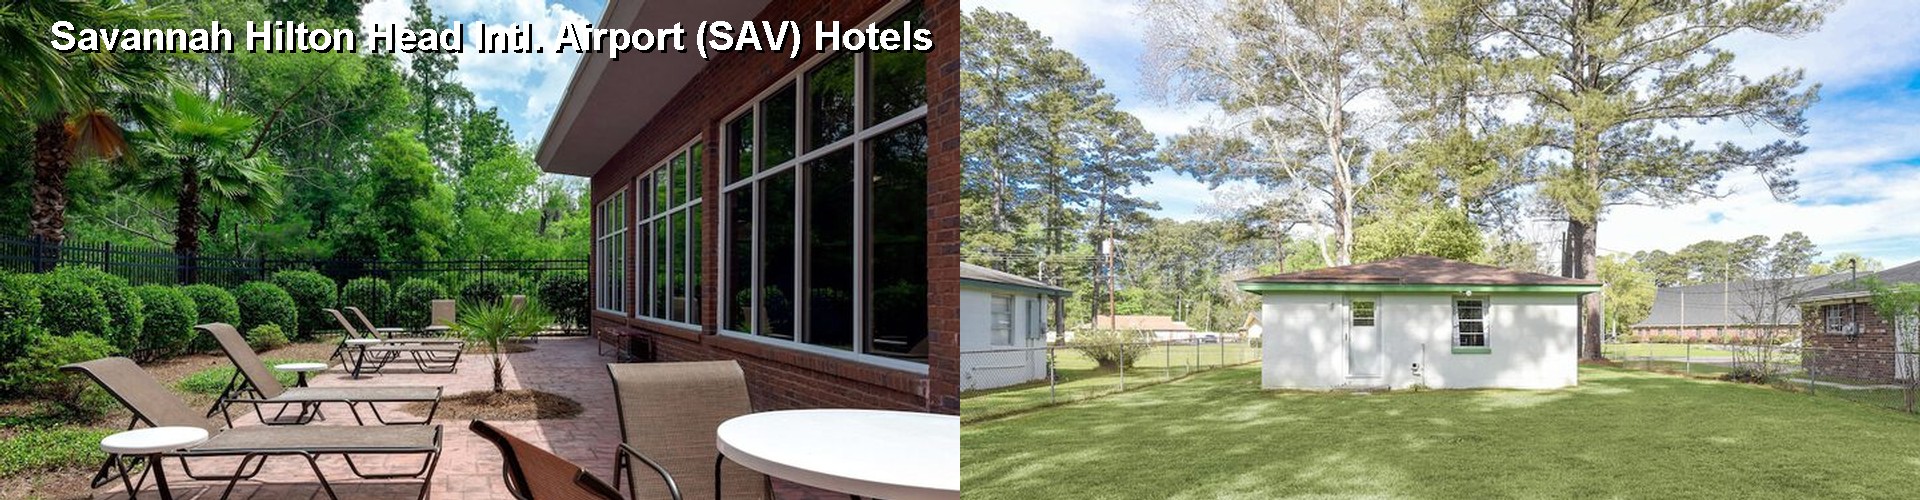 4 Best Hotels near Savannah Hilton Head Intl. Airport (SAV)